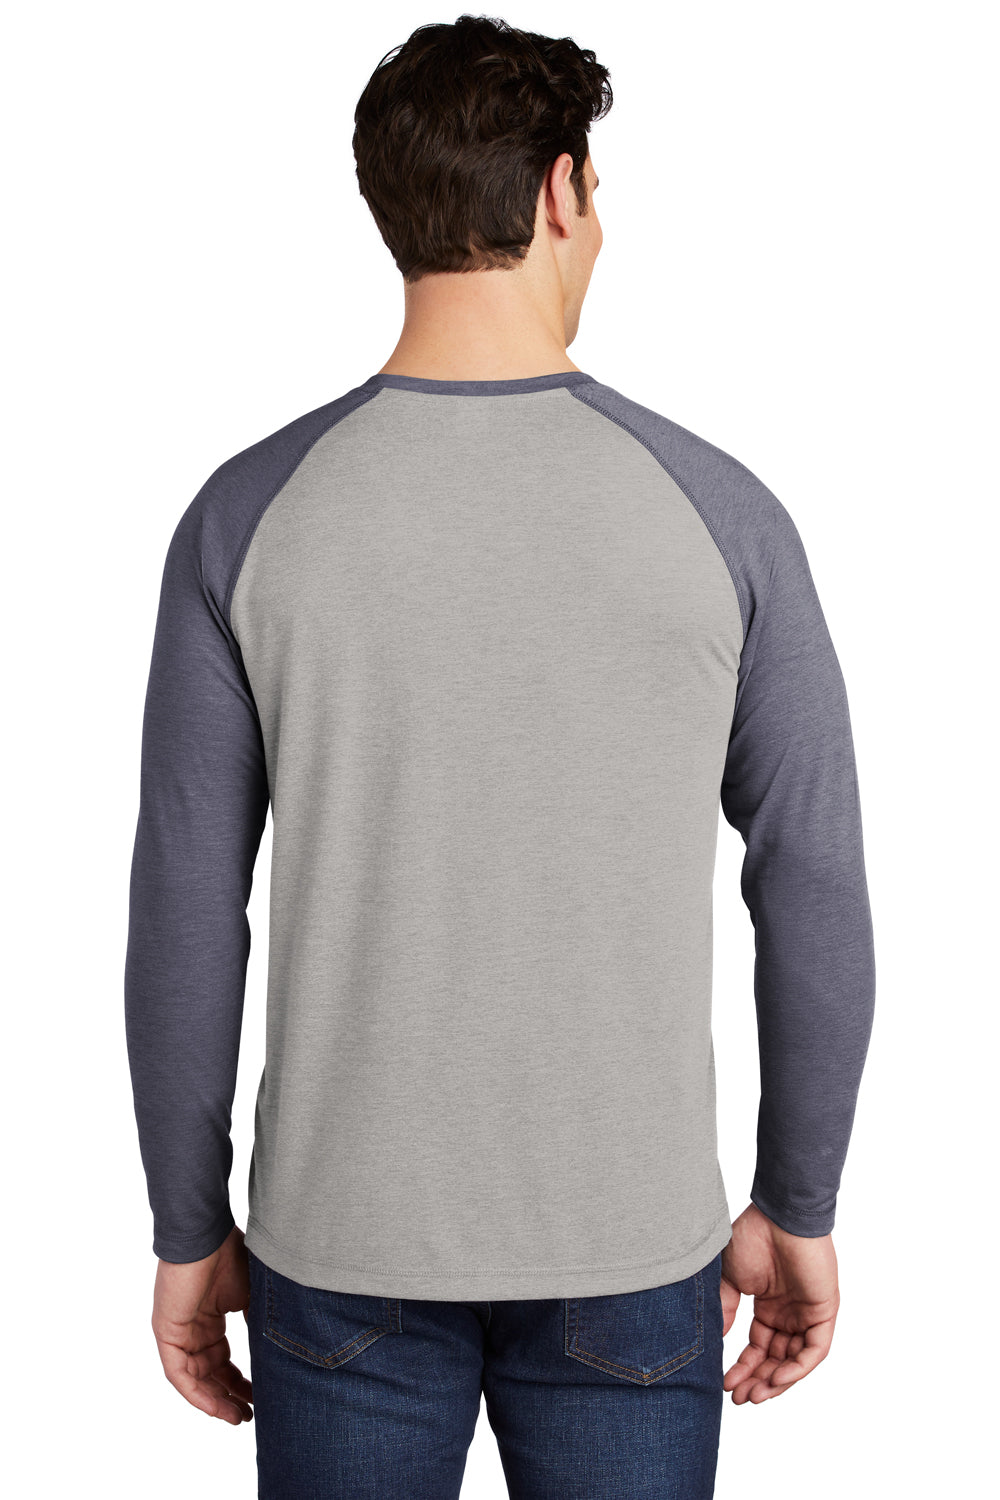 Sport-Tek Mens Moisture Wicking Long Sleeve Crewneck T-Shirt Heather True Navy Blue/Heather Light Grey Side